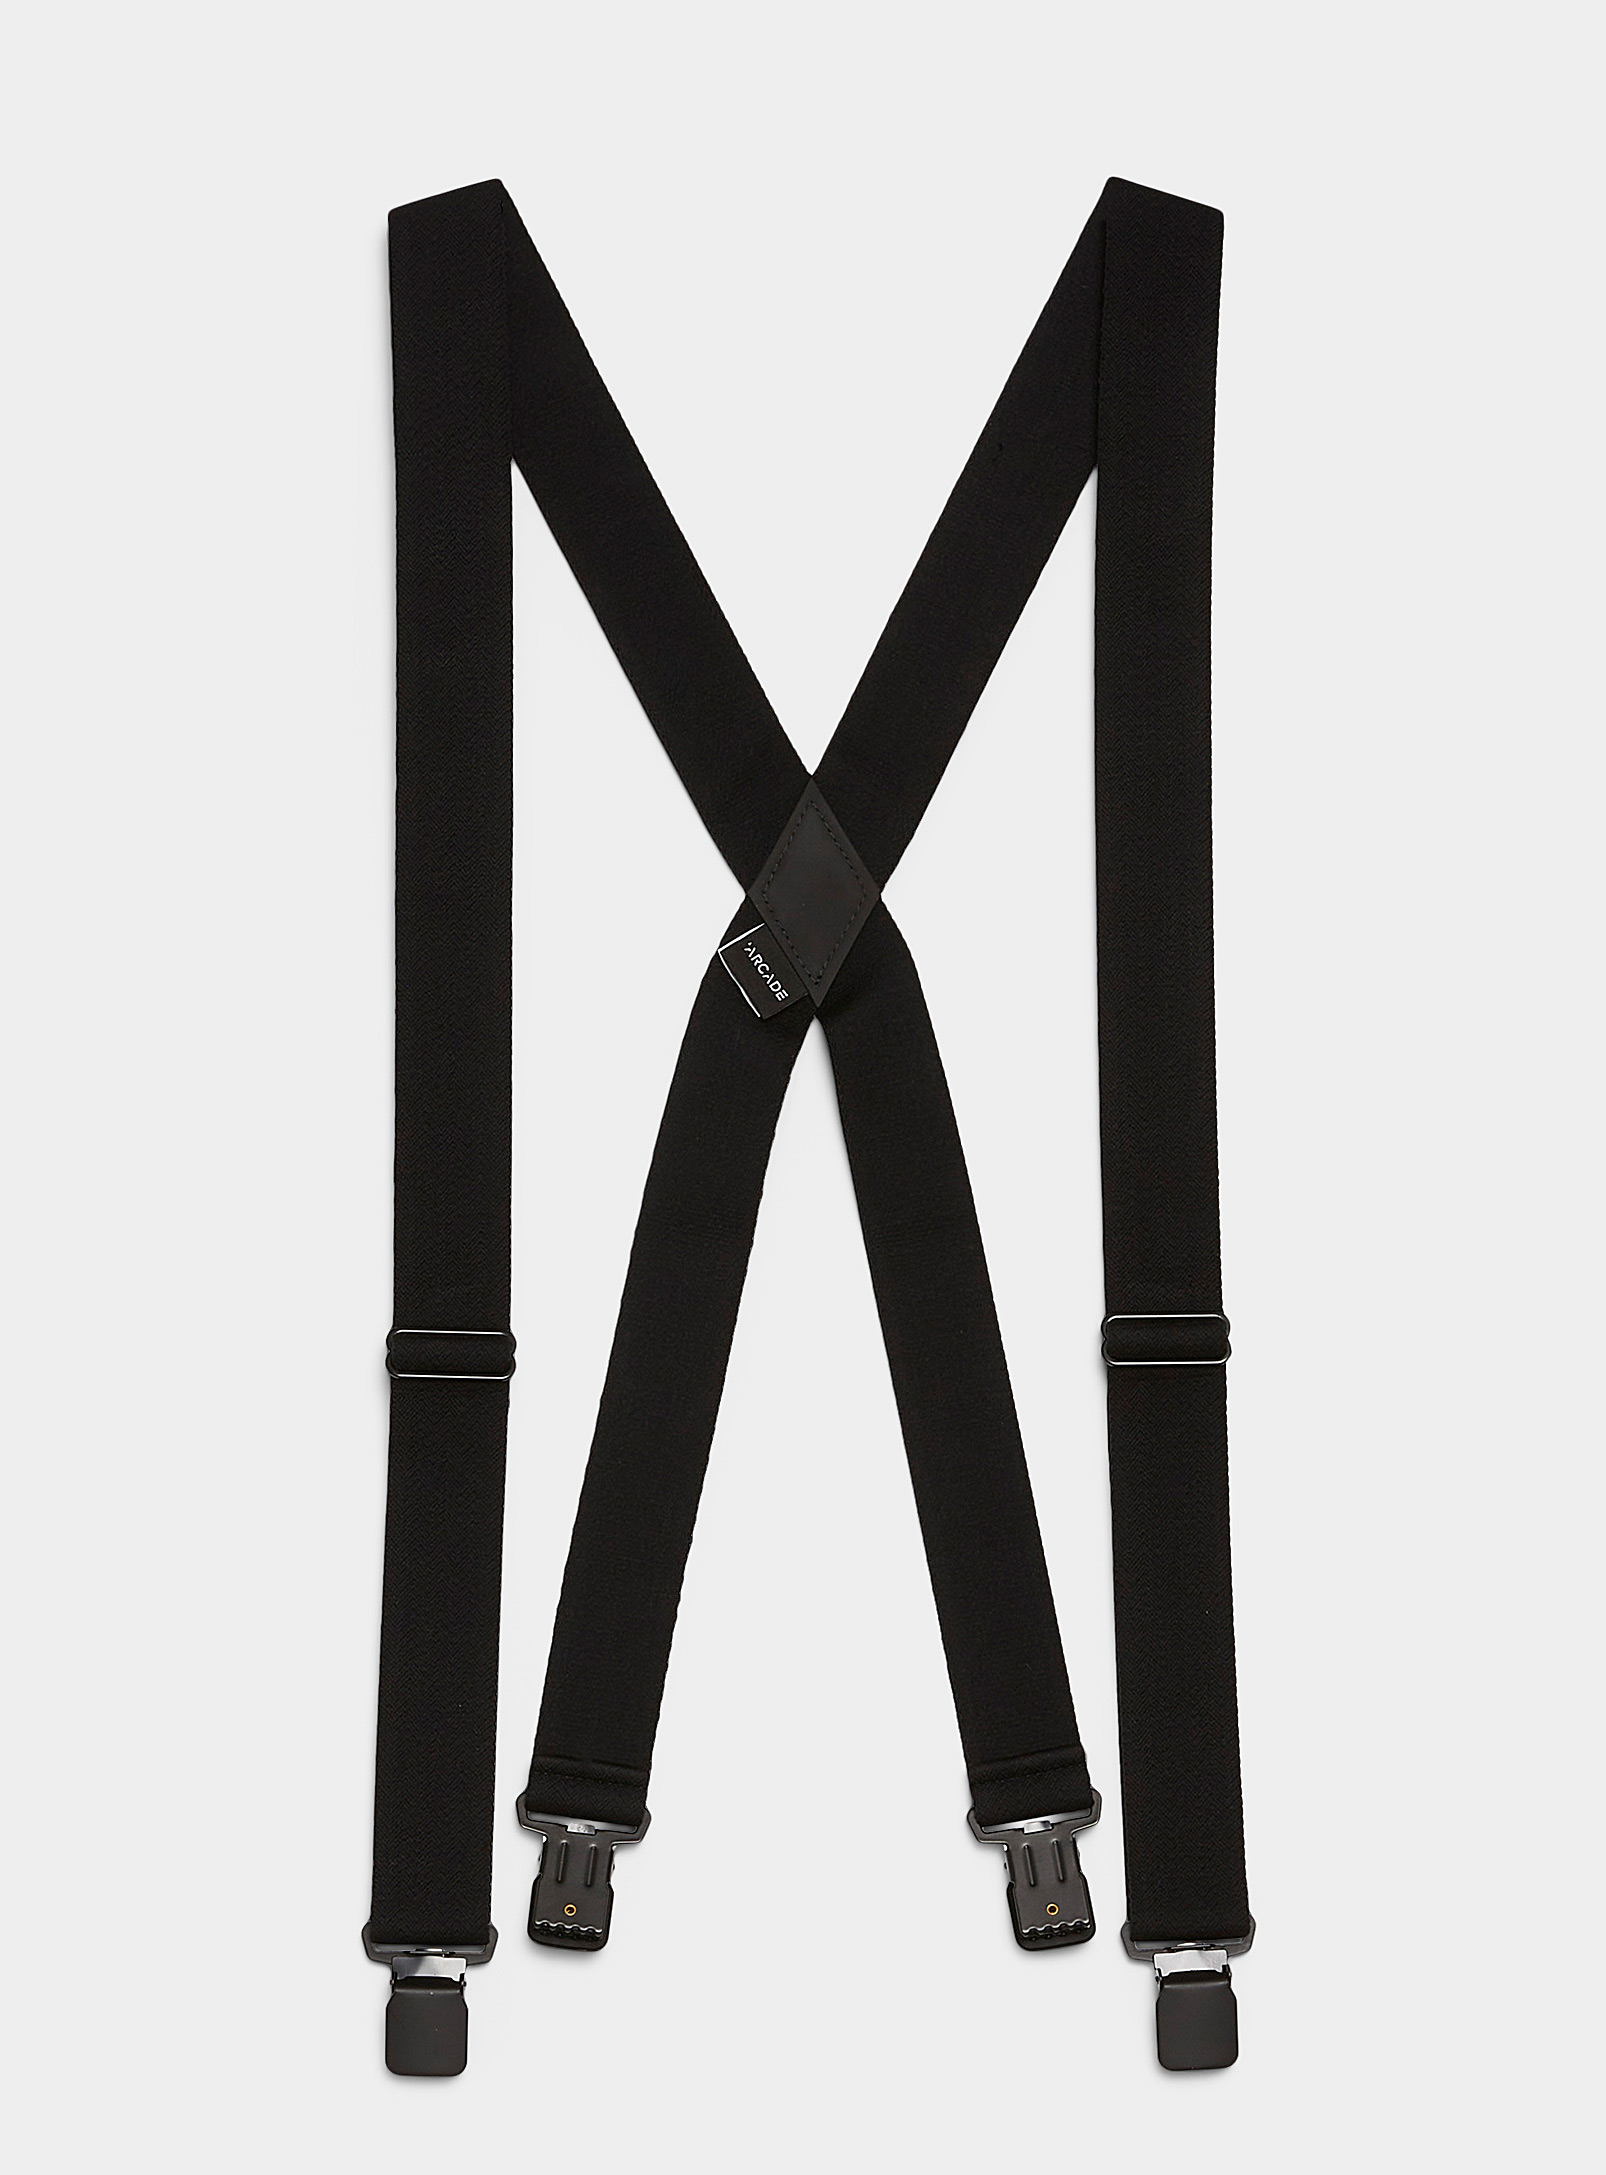 Arcade - Men's Jessup suspenders